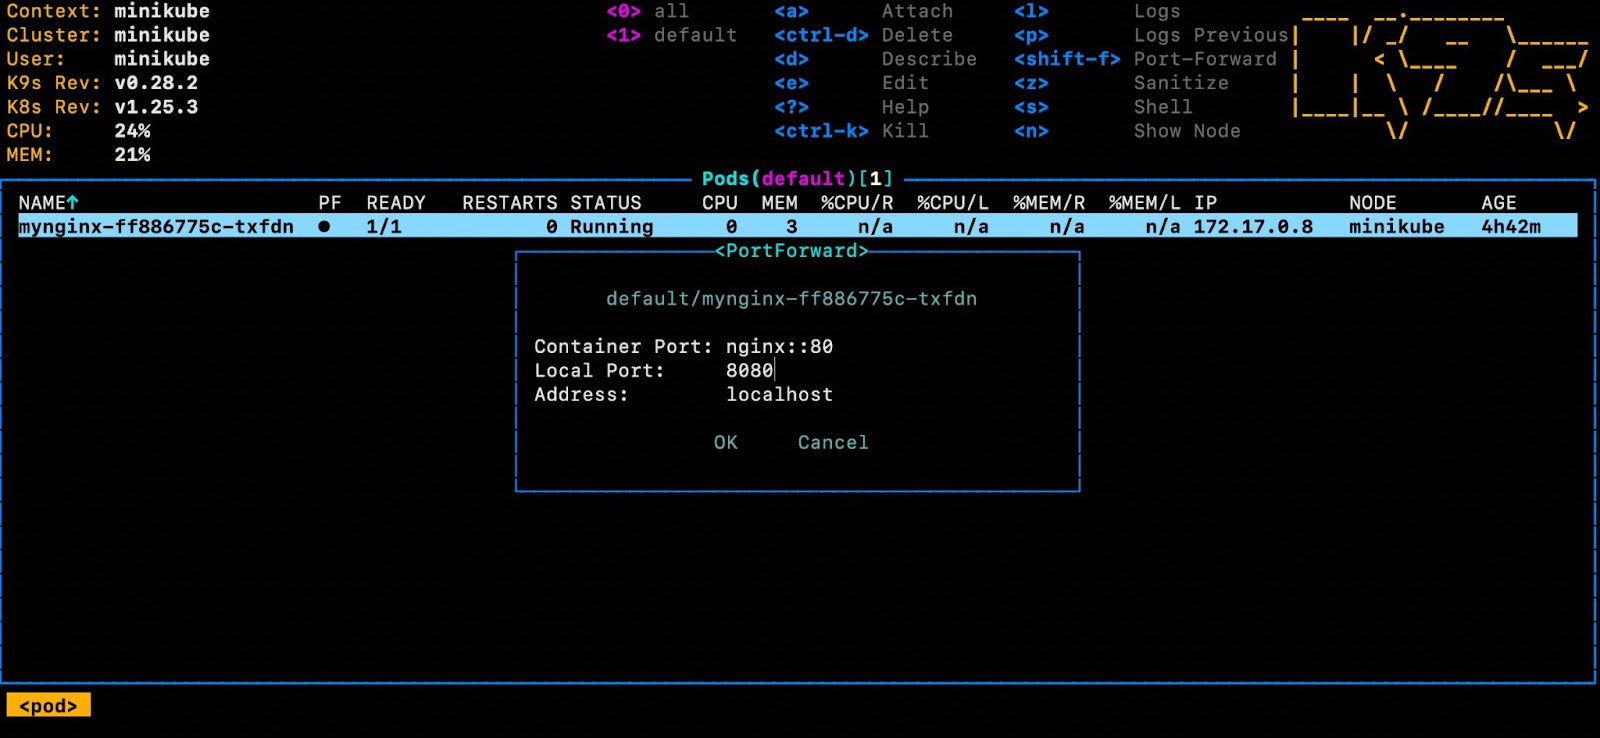 K9s interface - port forwarding dialog box